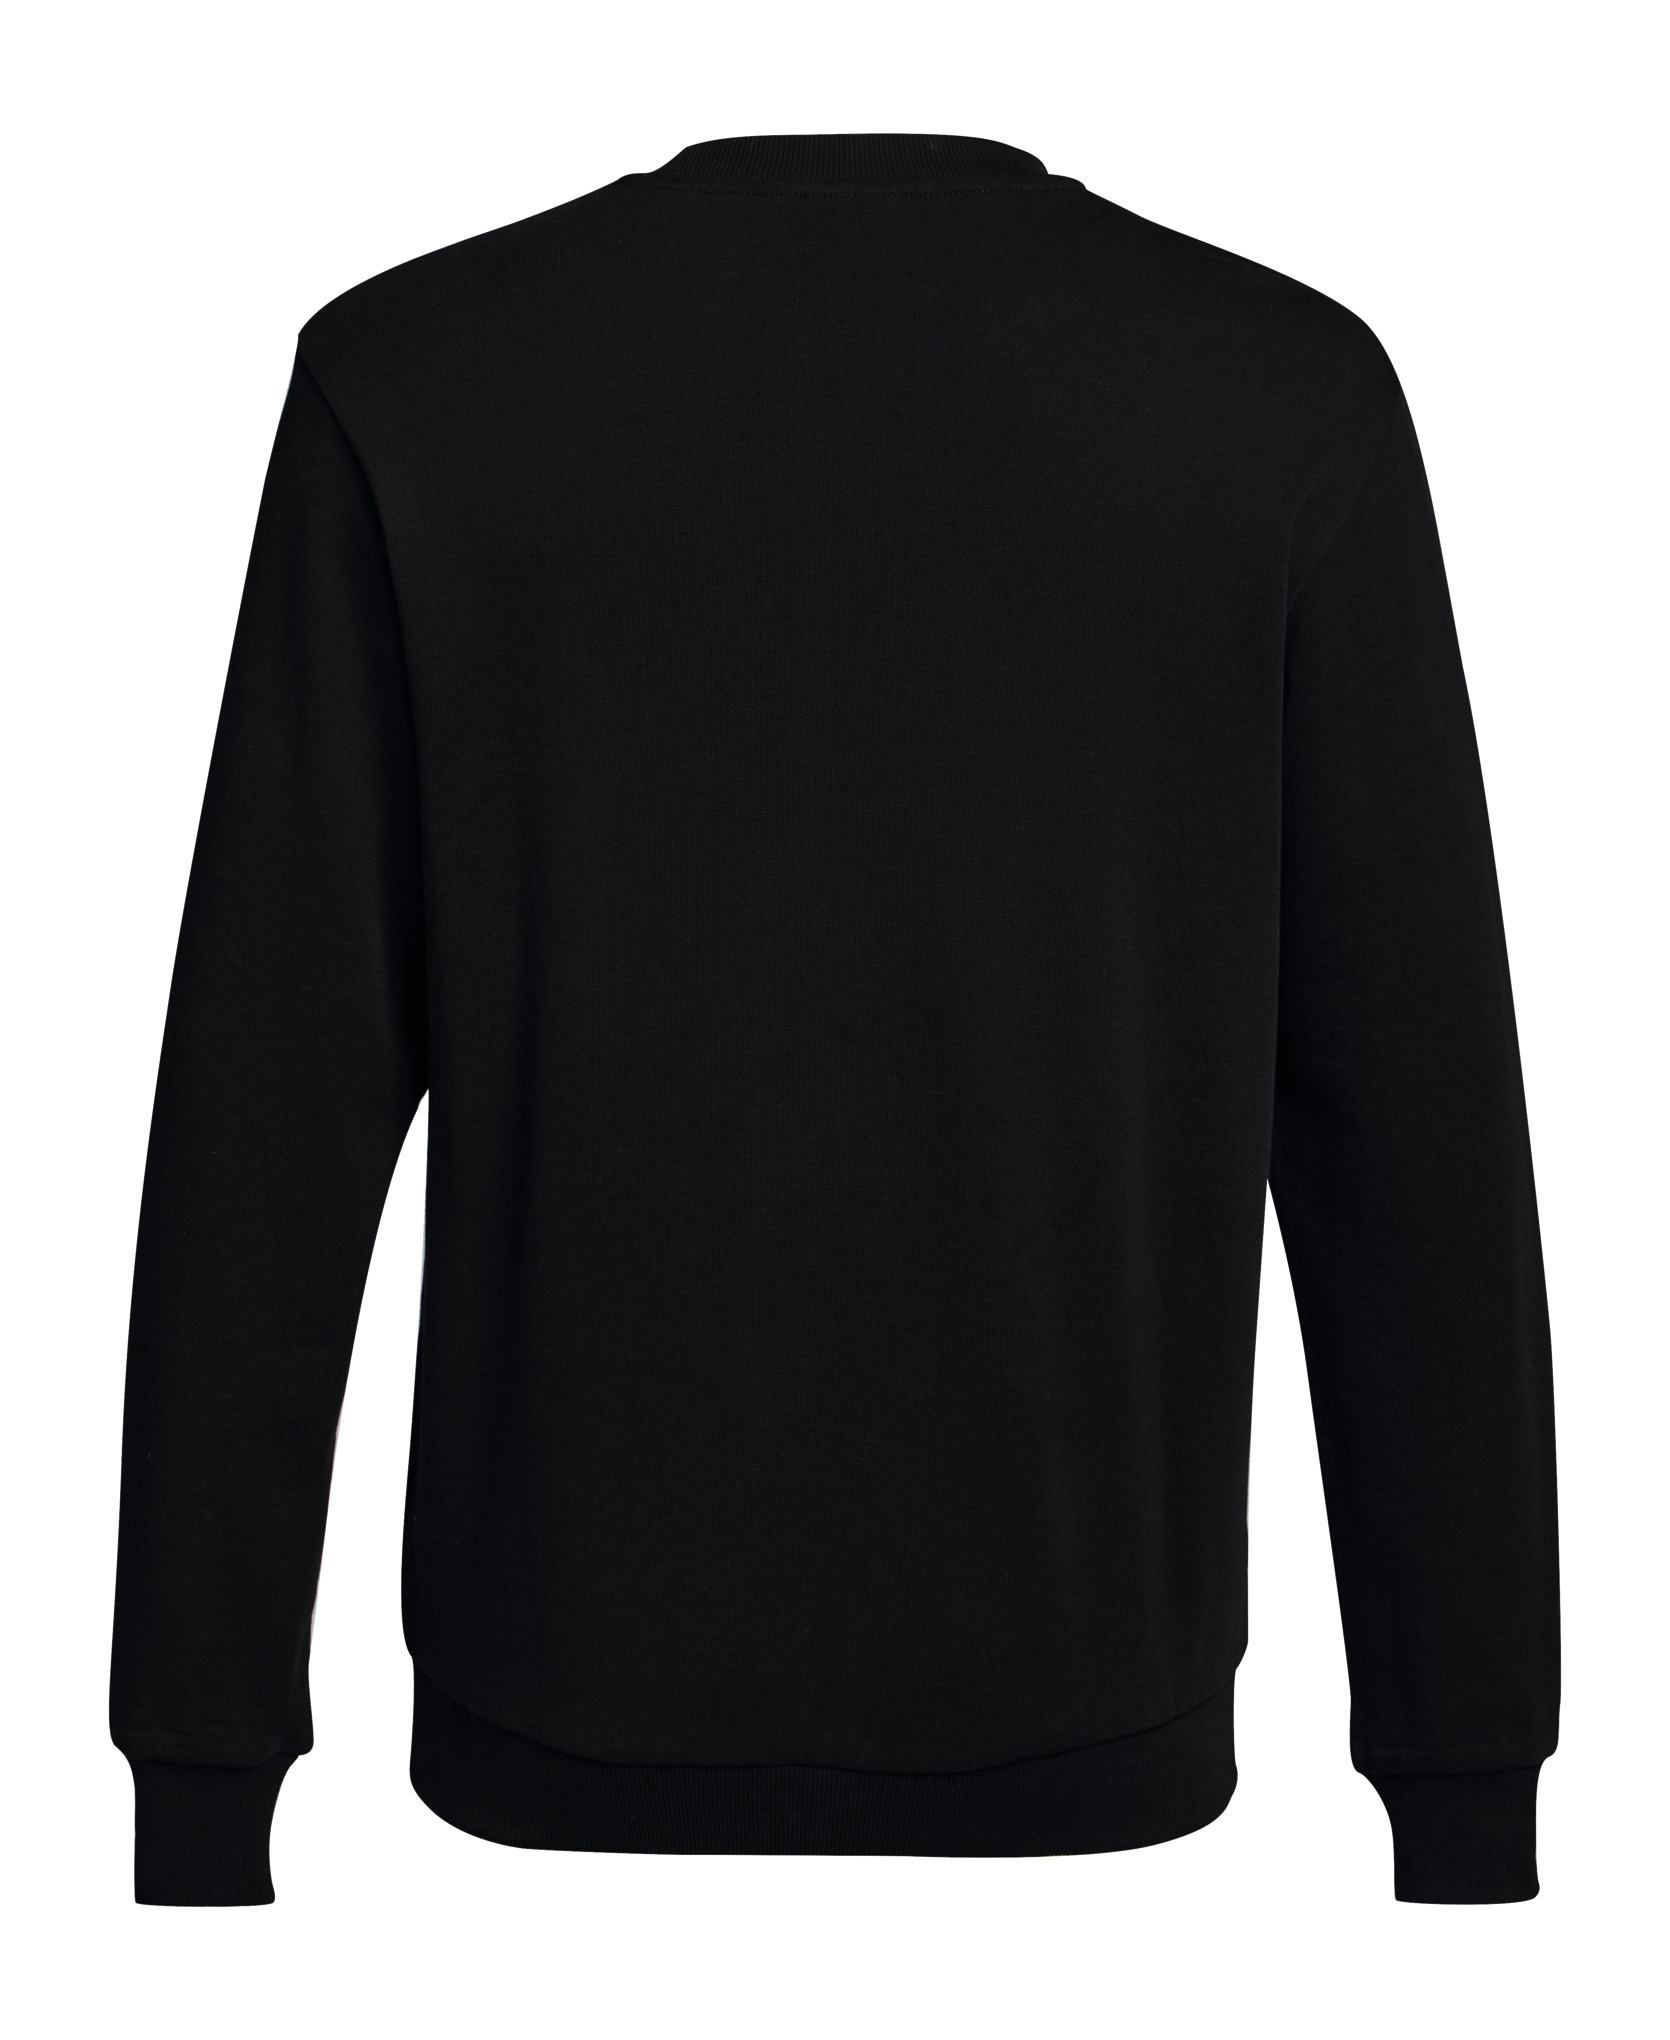 STIHL logo sweatshirt with zip-pockets